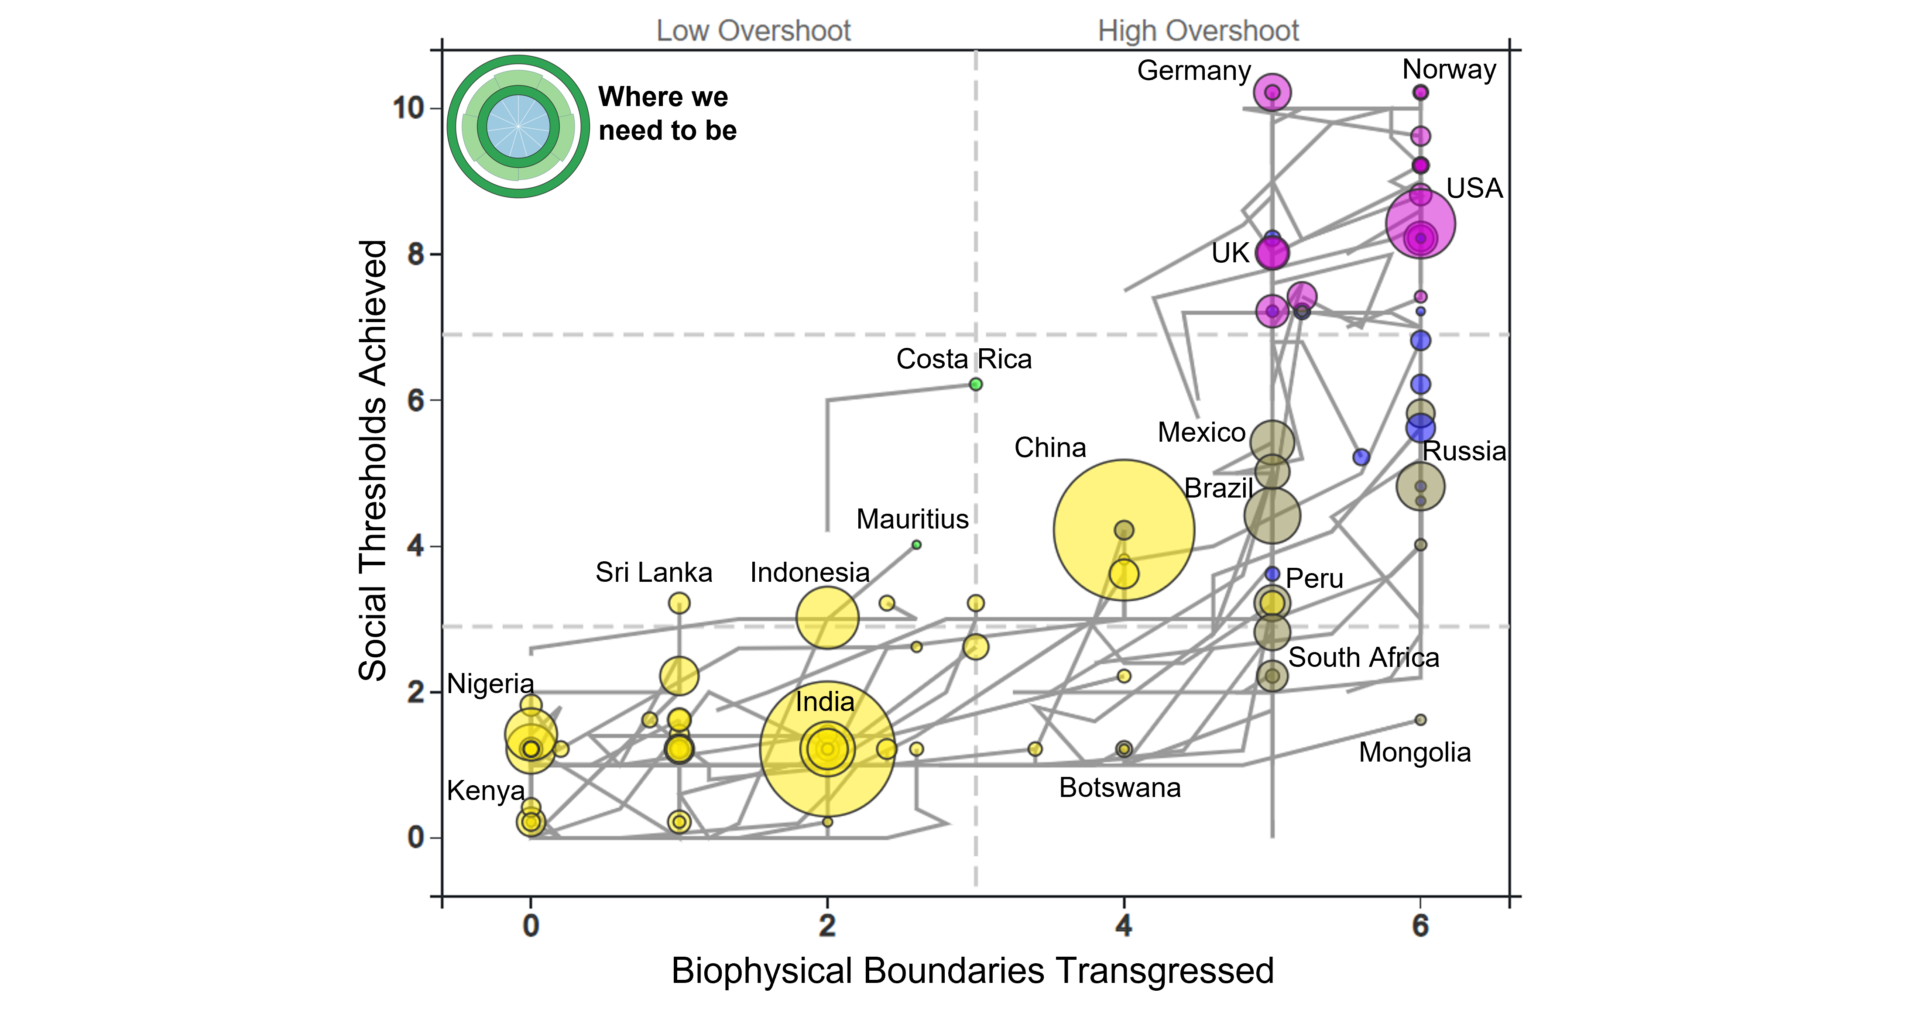 Scatterplot of boundaries transgressed versus thresholds achieved with pathways